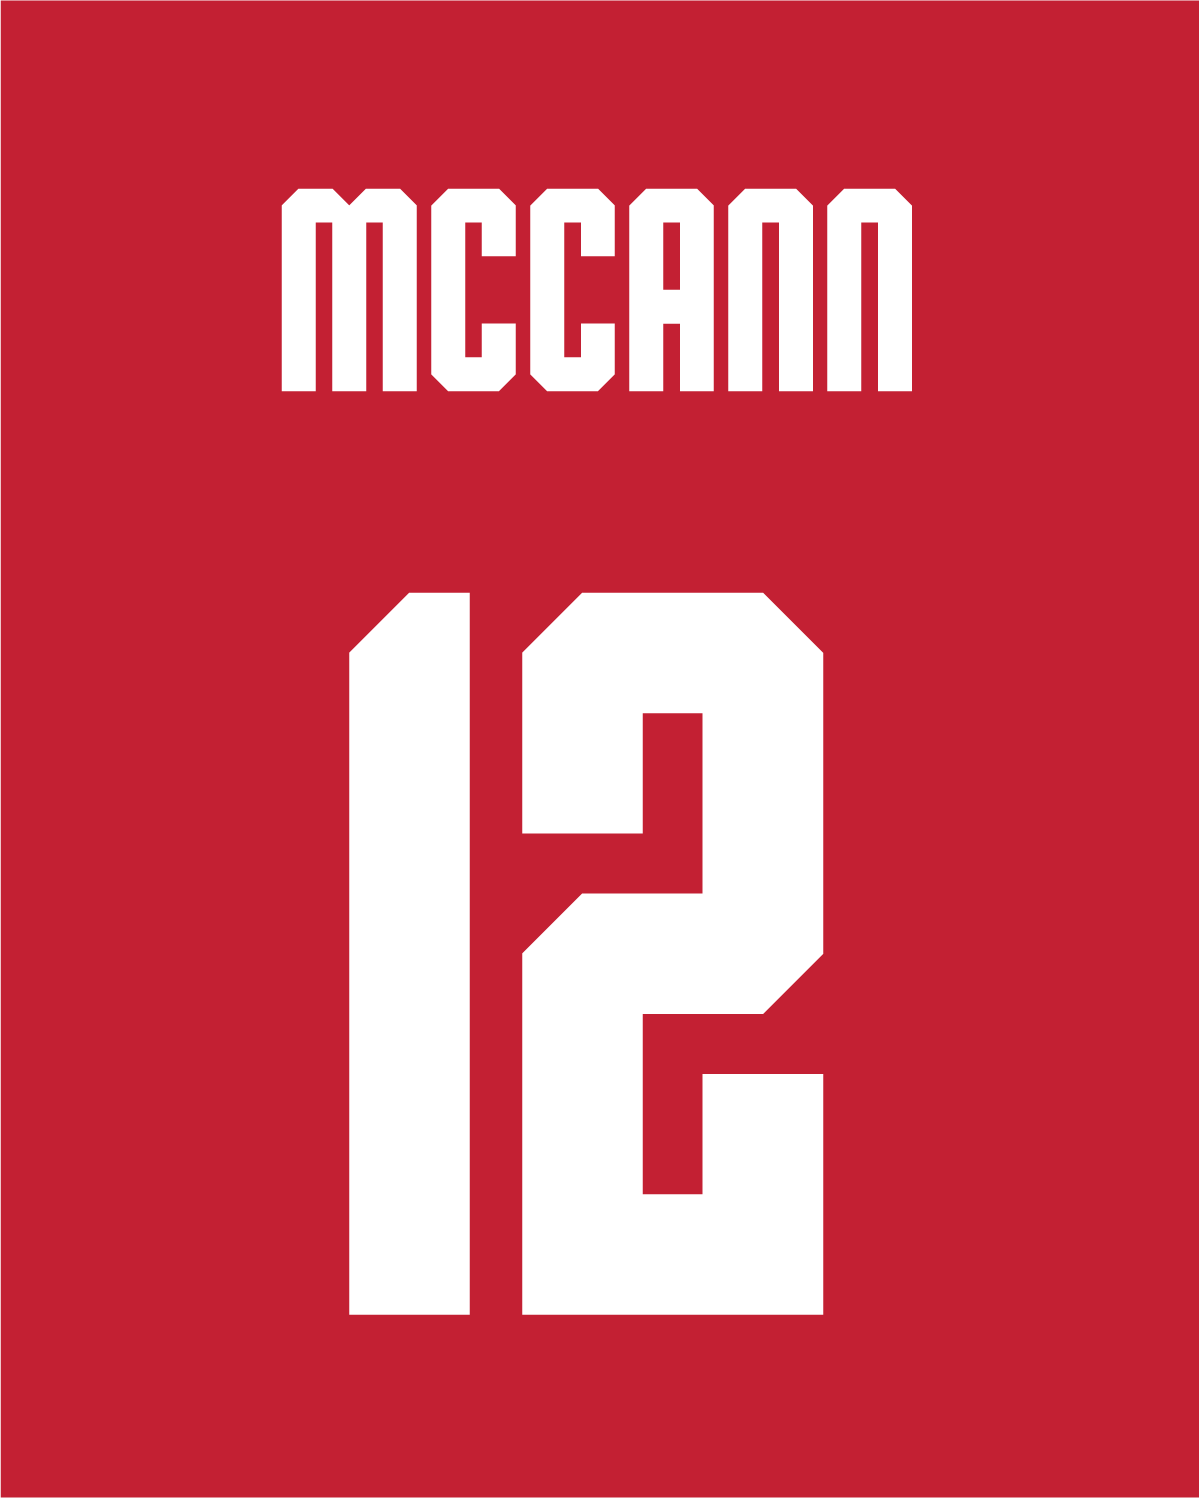 Meghan Mccann | #12